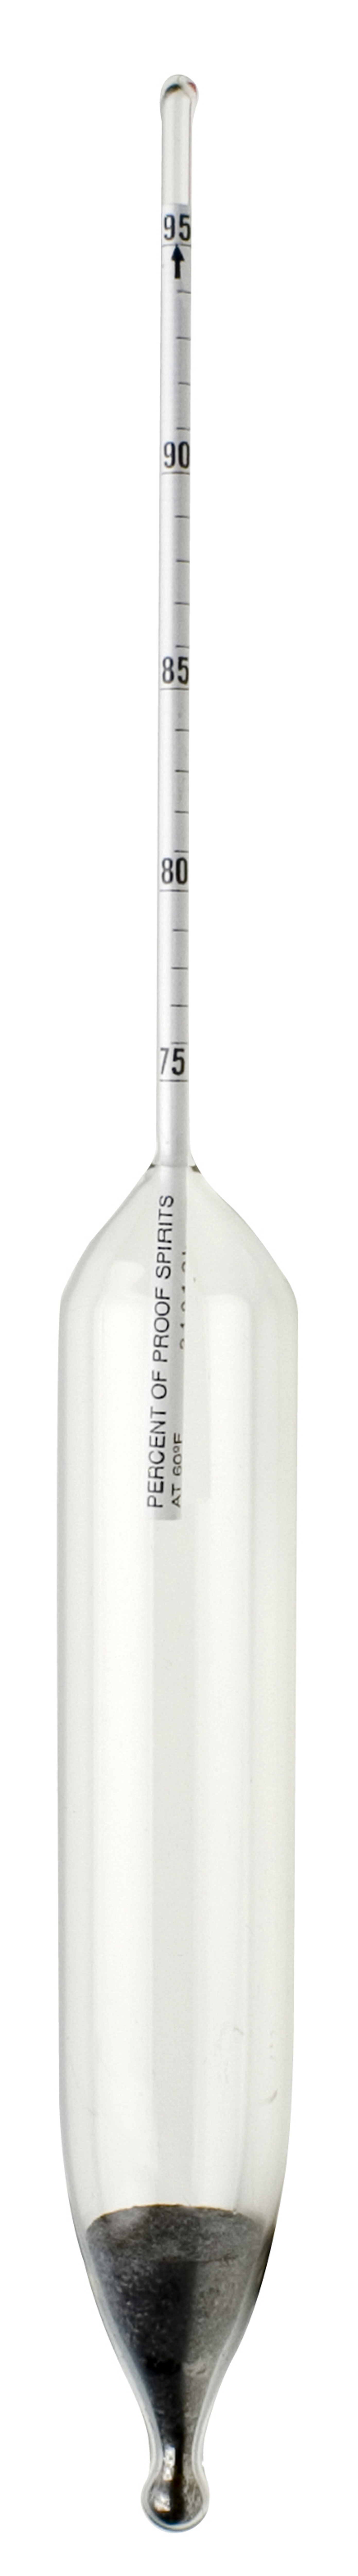 SP Bel-Art, H-B DURAC 90/110 Percent Alcohol Proof – Ethyl Alcohol Hydrometer